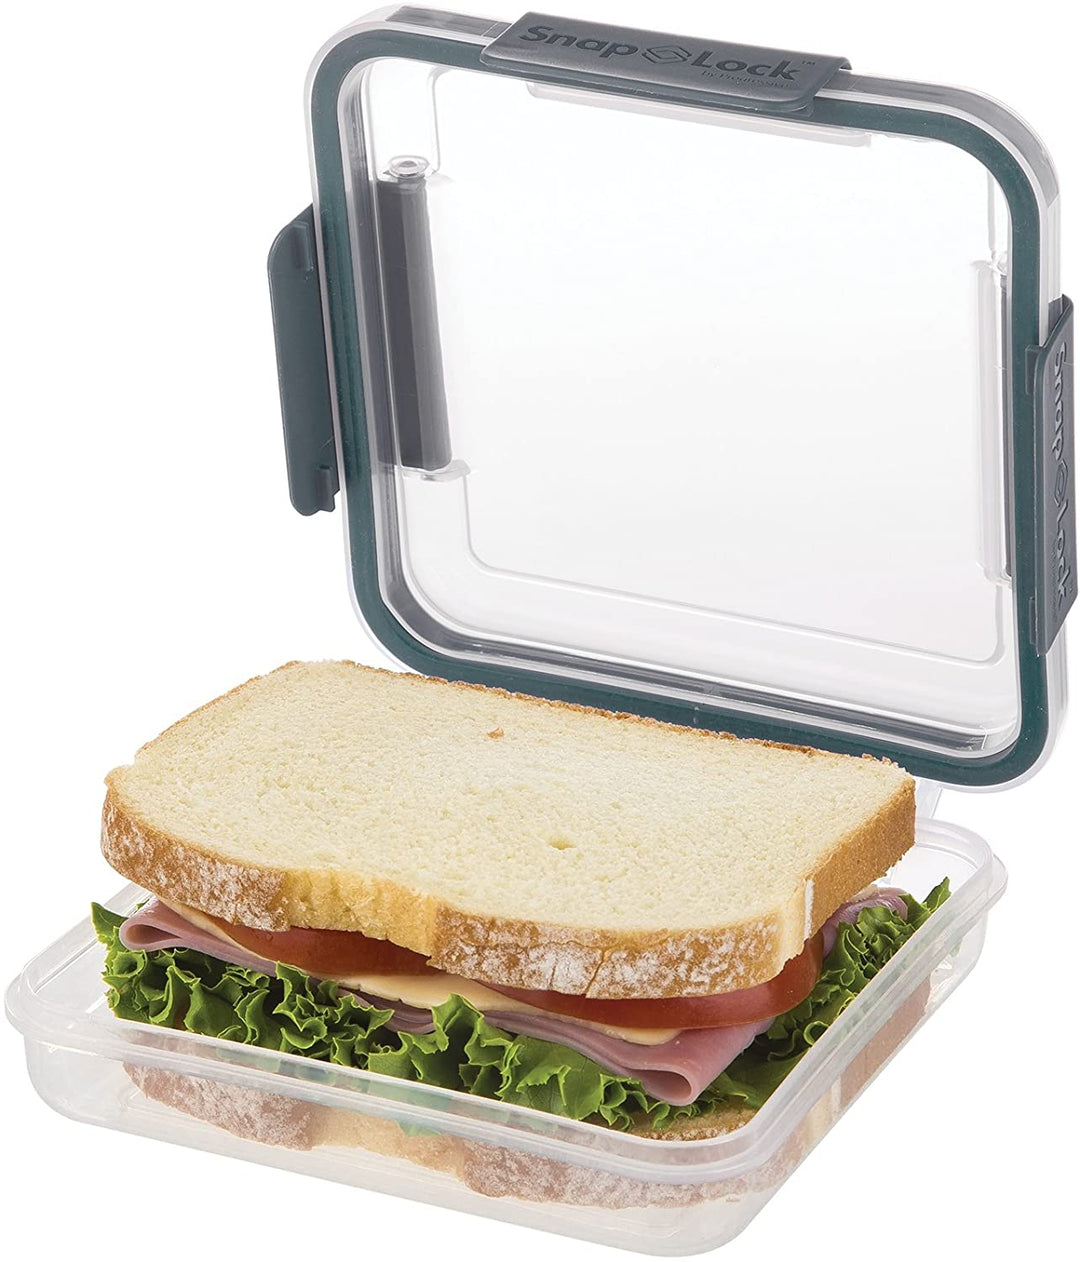 Progressive SnapLock Sandwich To Go